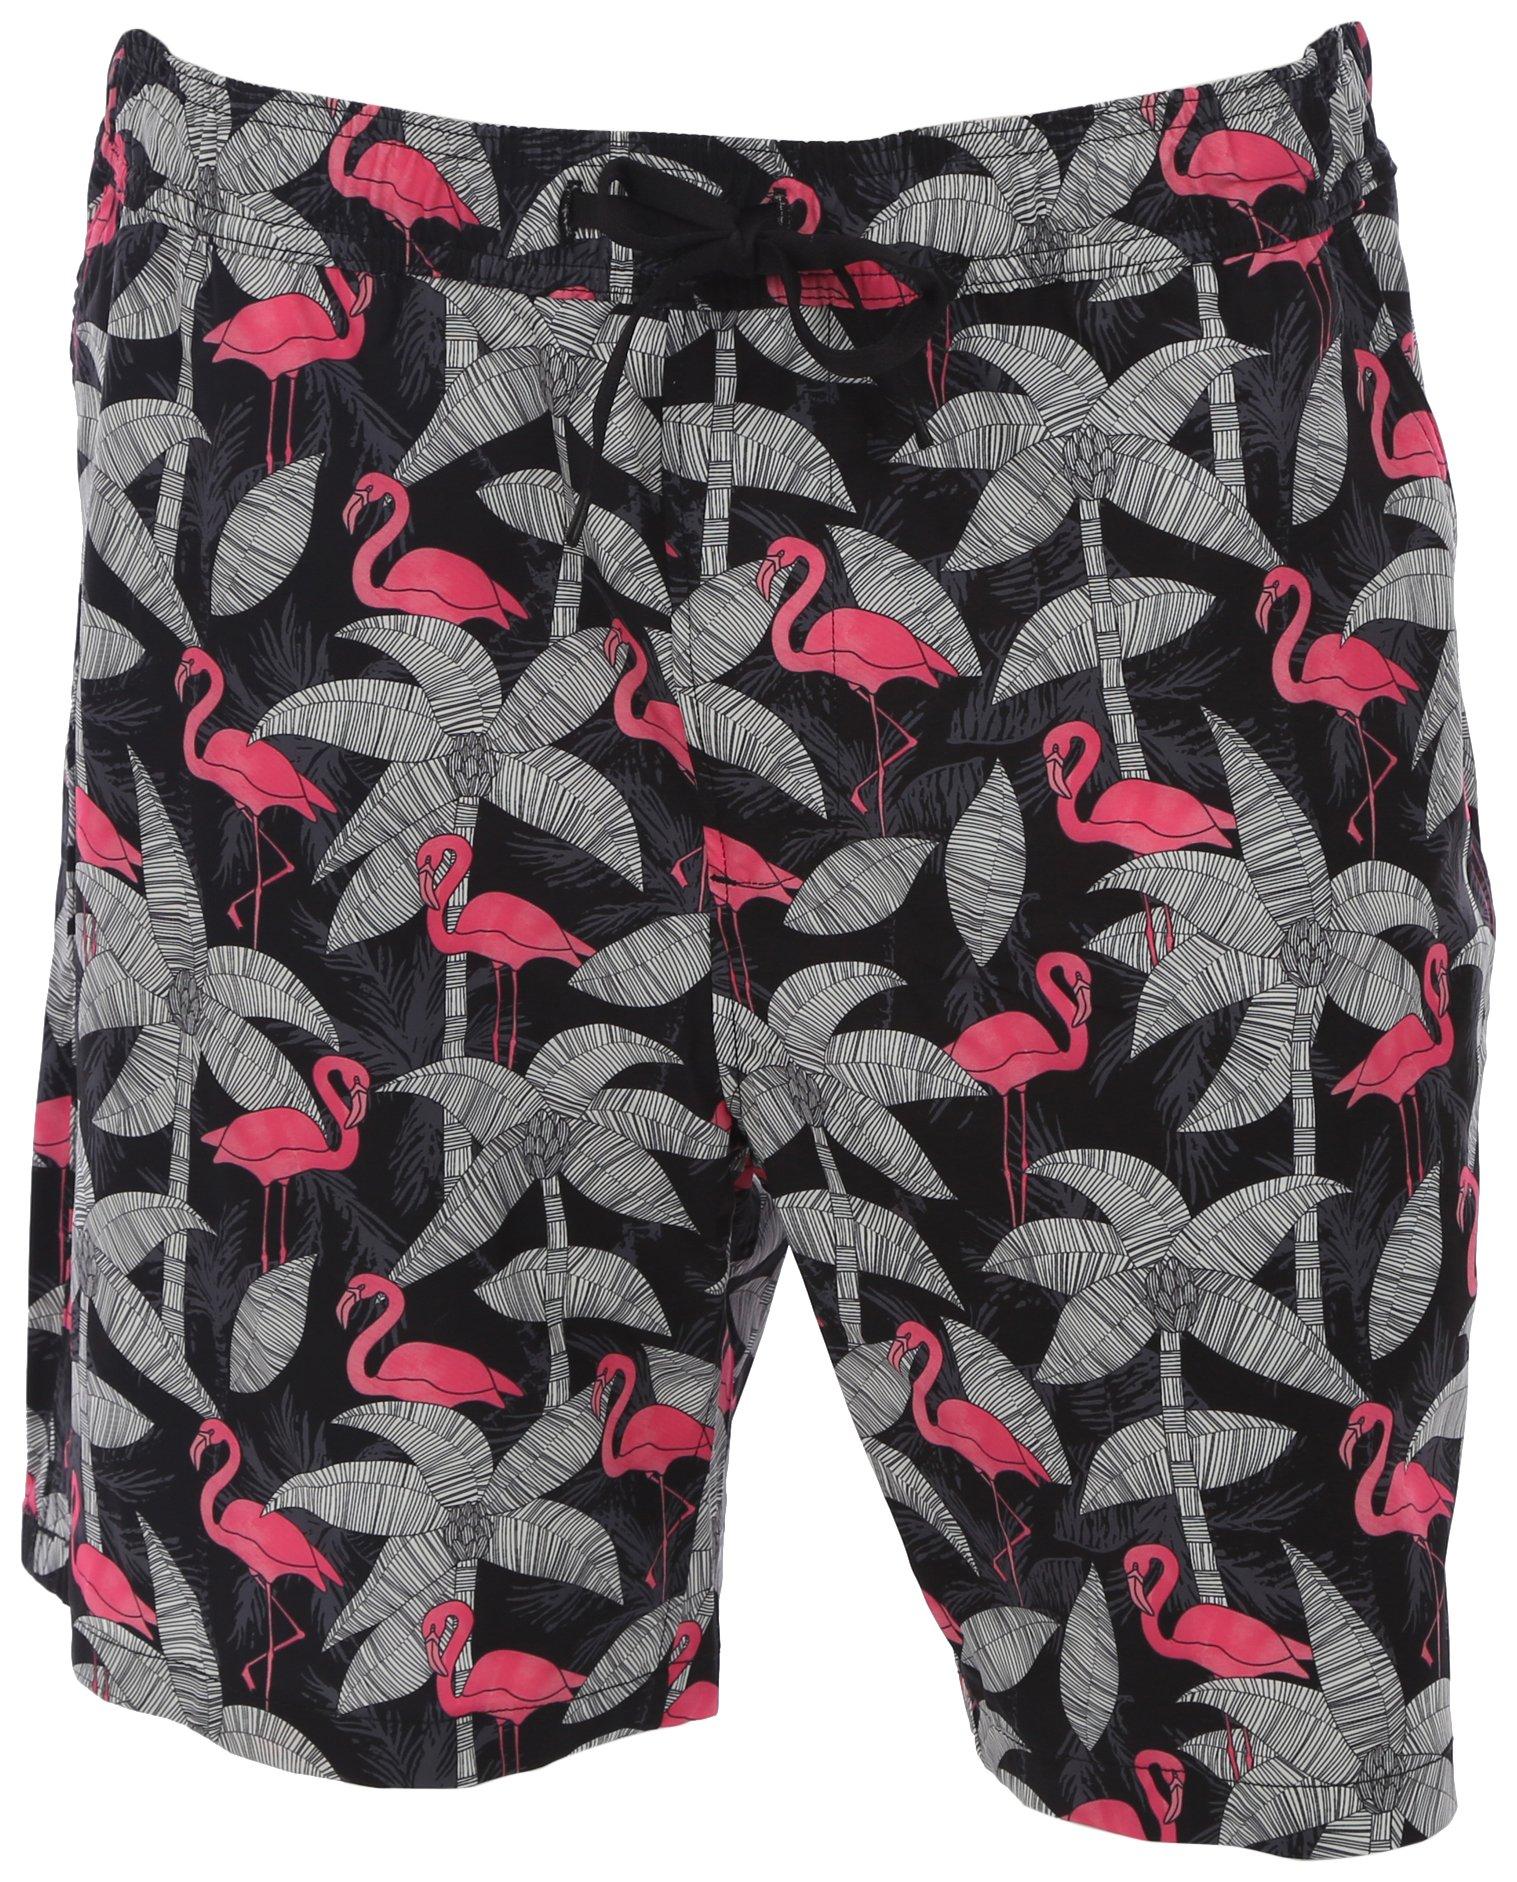 PROJEK RAW Mens Flamingo Print Swim Shorts